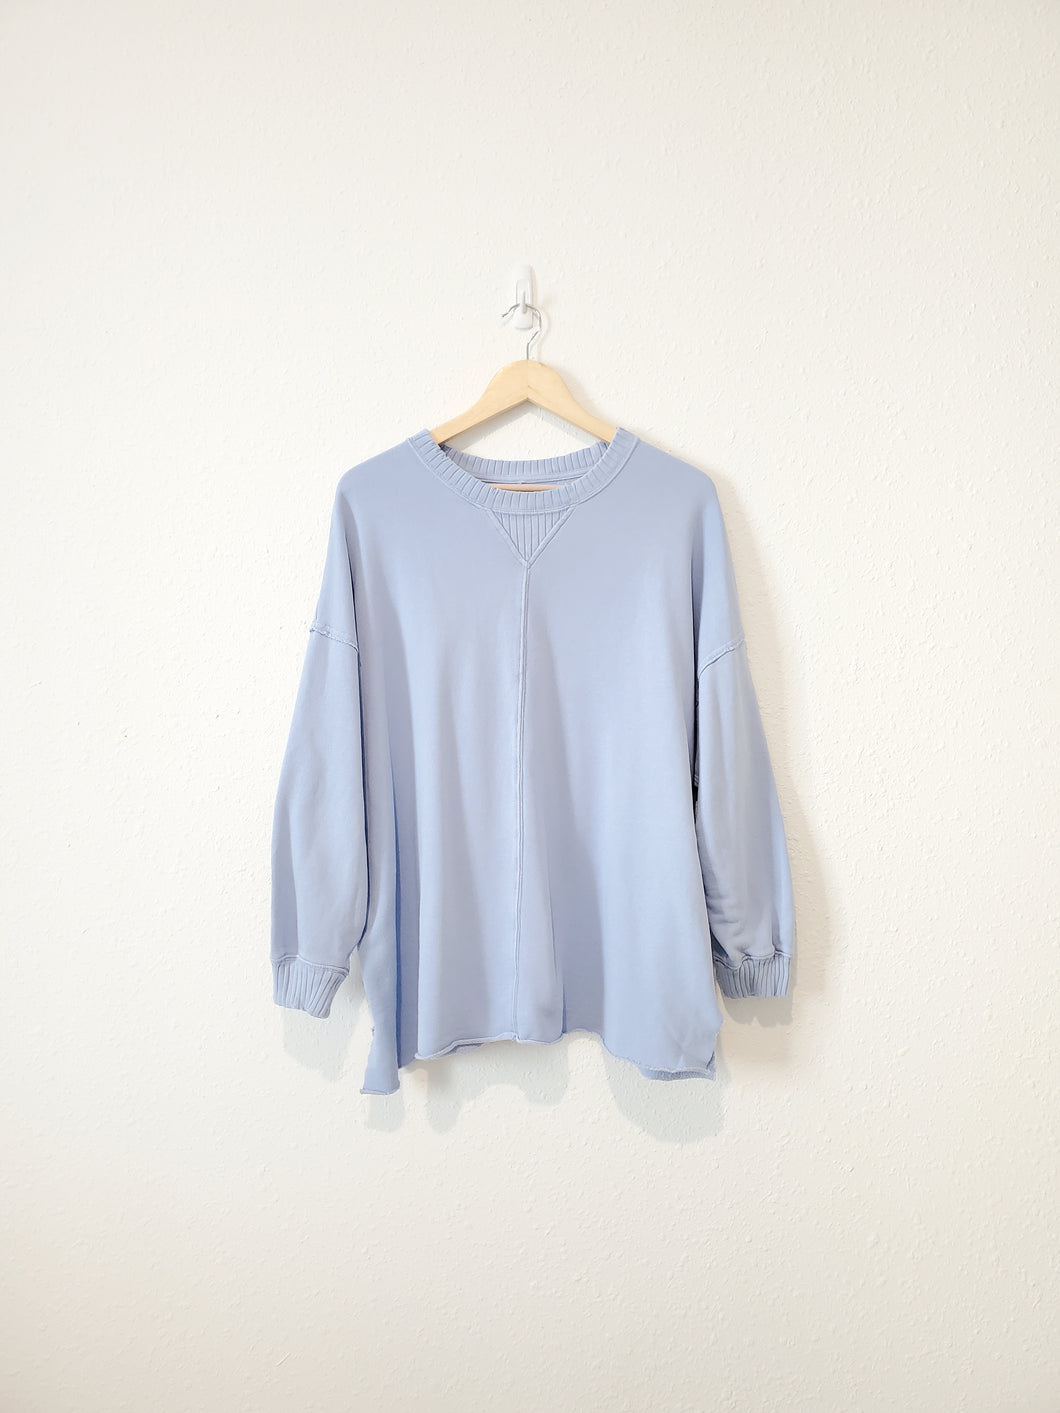 Aerie Blue Crewneck Sweatshirt (M)